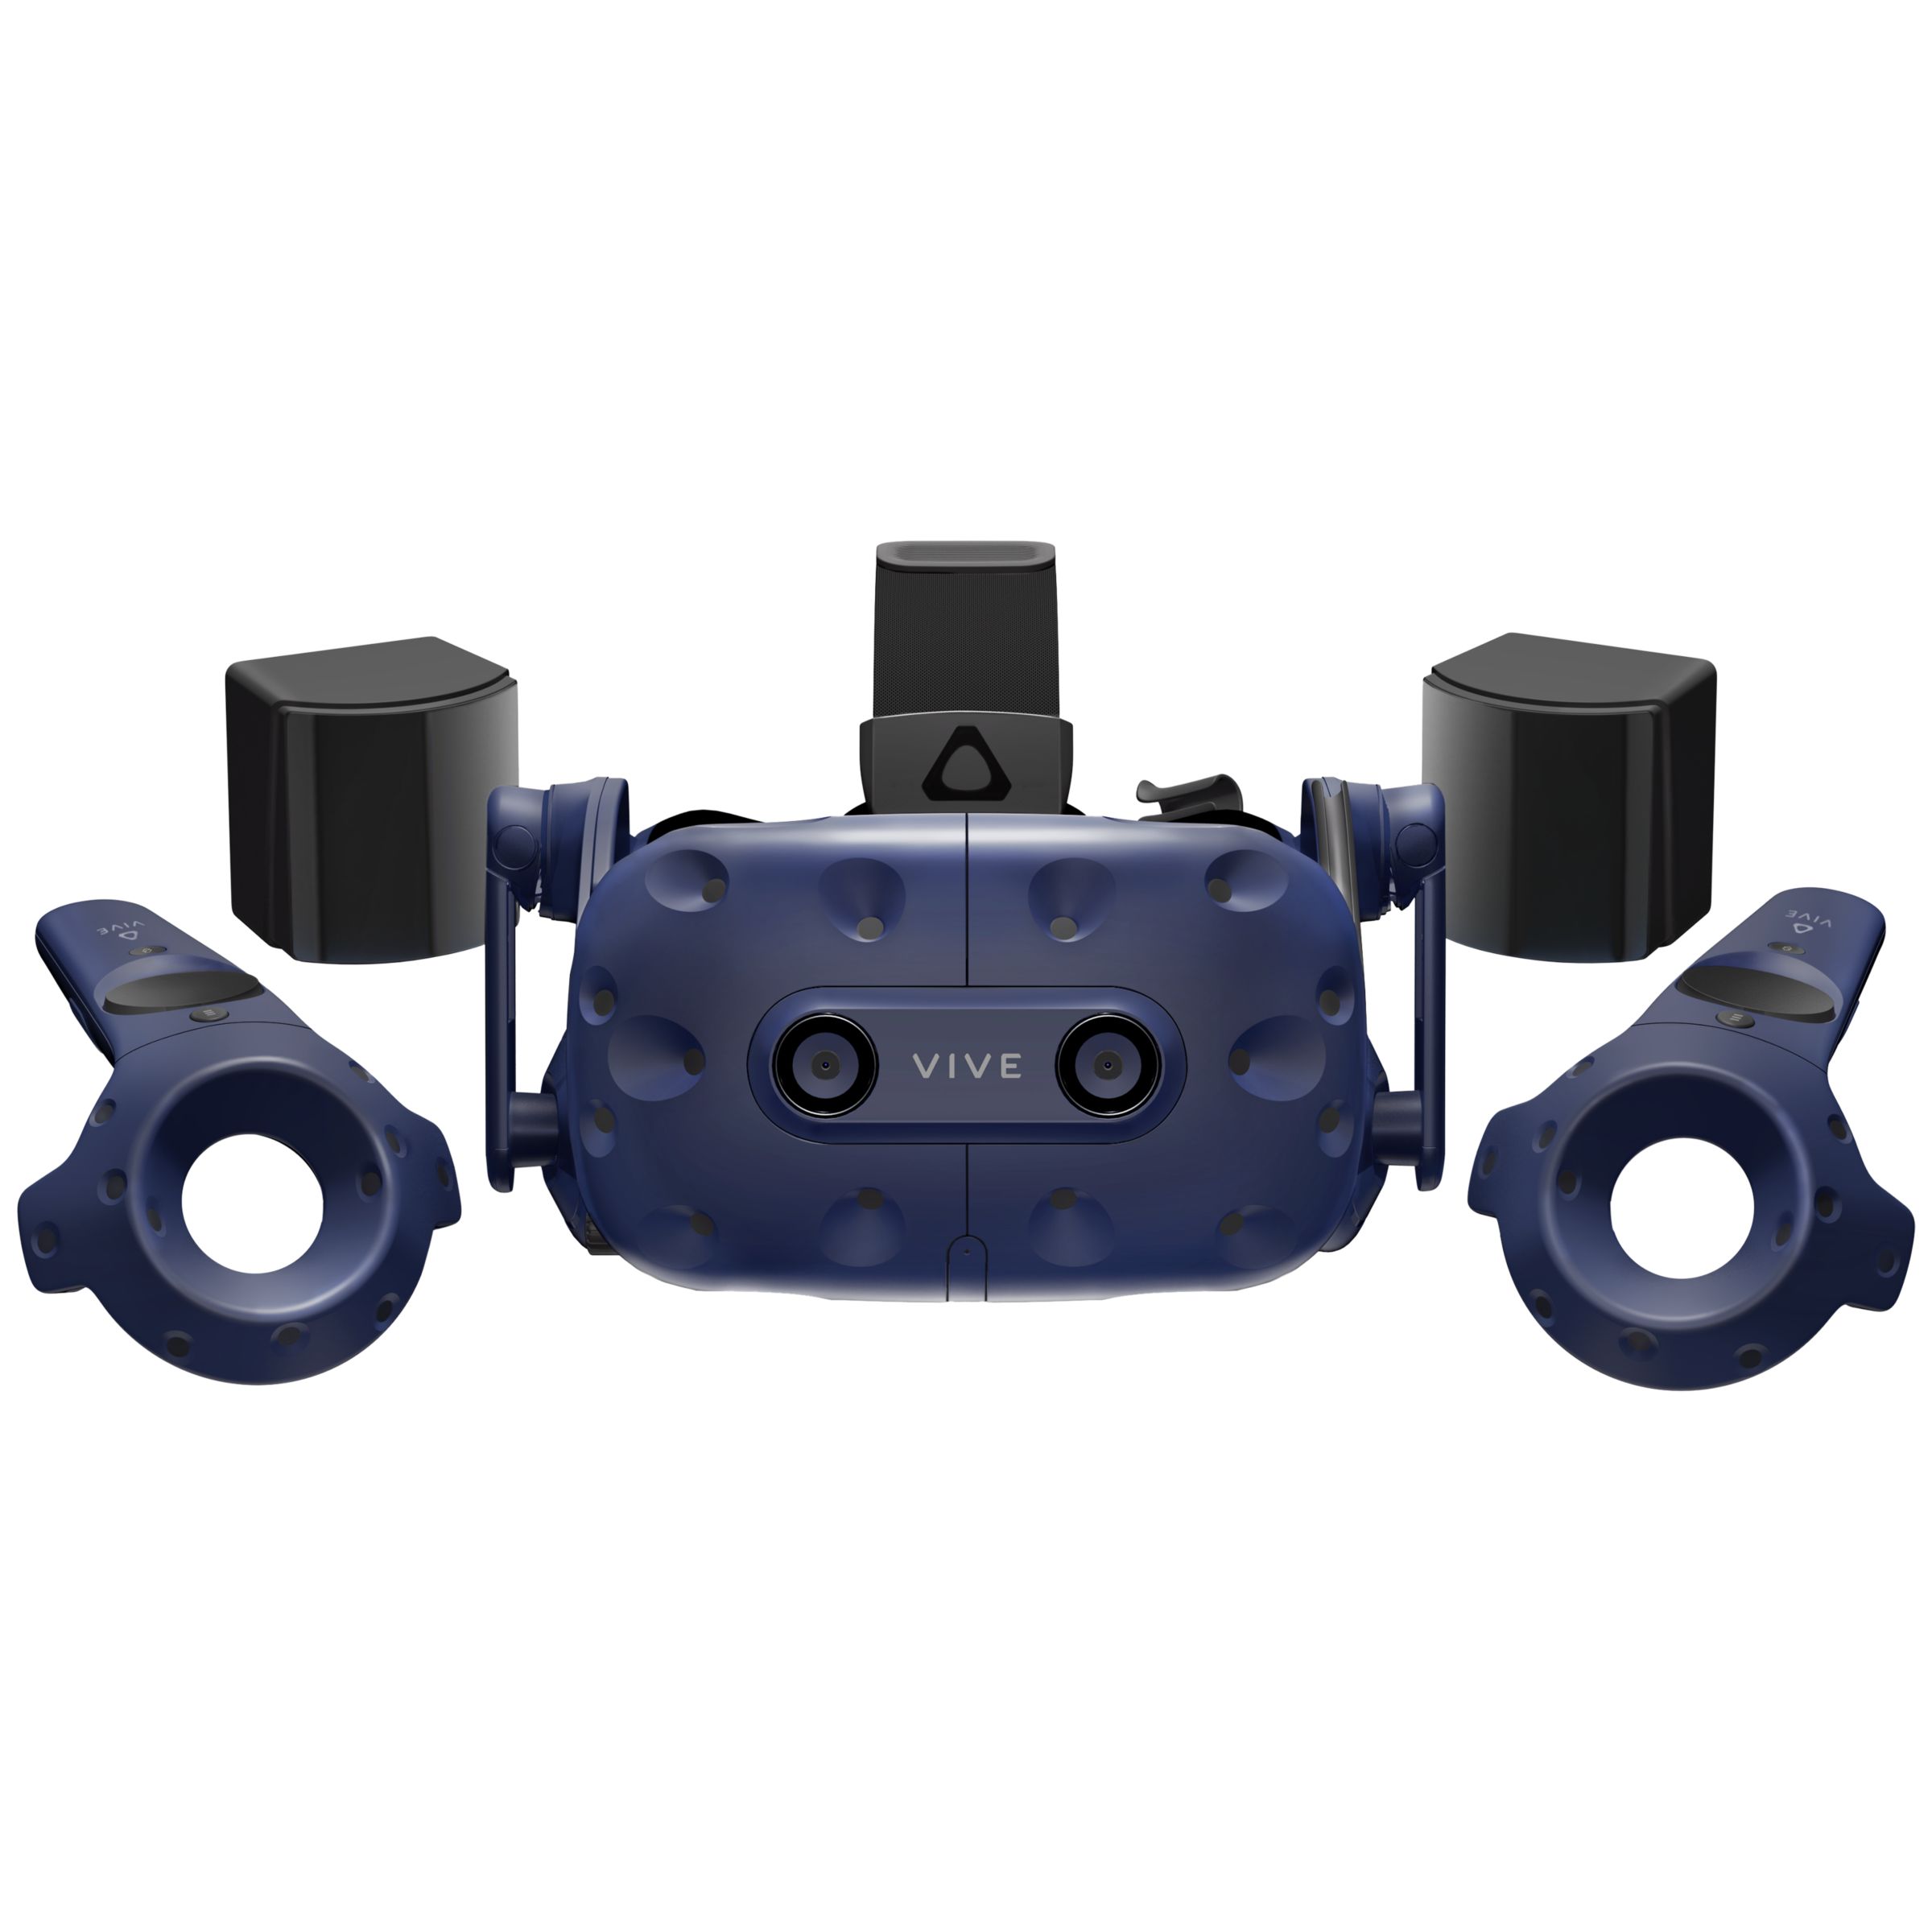 HTC Vive Pro Full Kit, Virtual Reality (VR) System